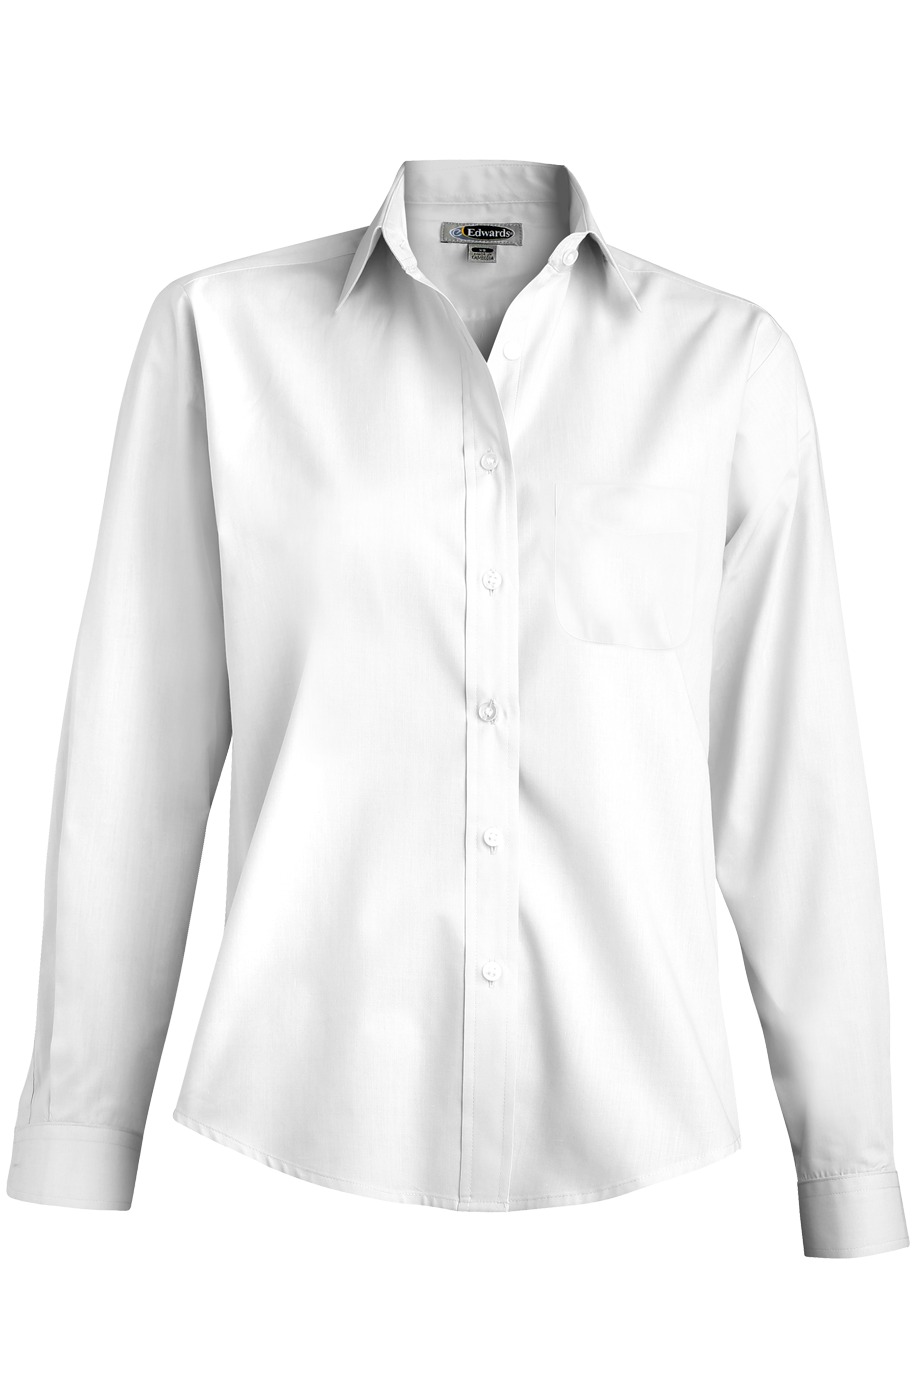 Edwards Garment 5363 - Women's Long Sleeve Value Broadcloth Shirt